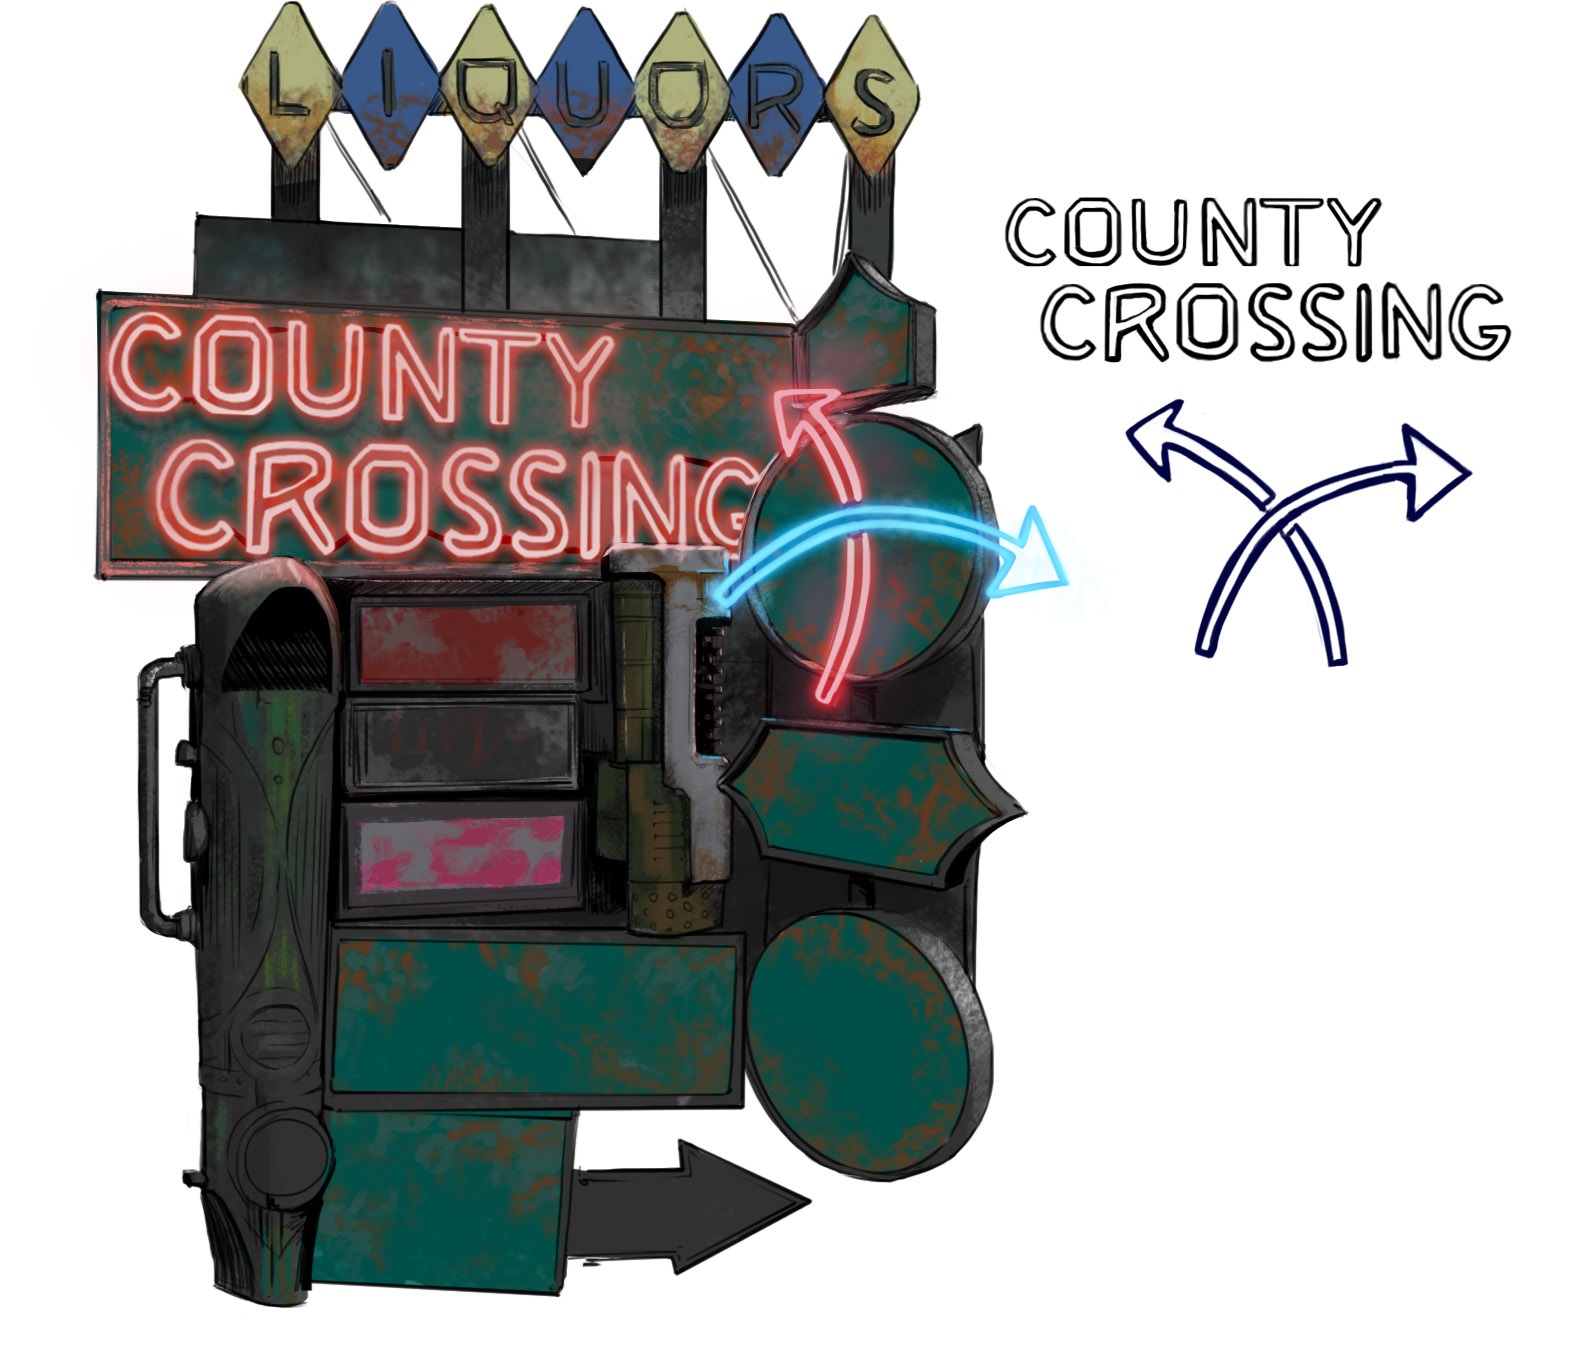 2017_11_08_county_crossing_l3.jpg